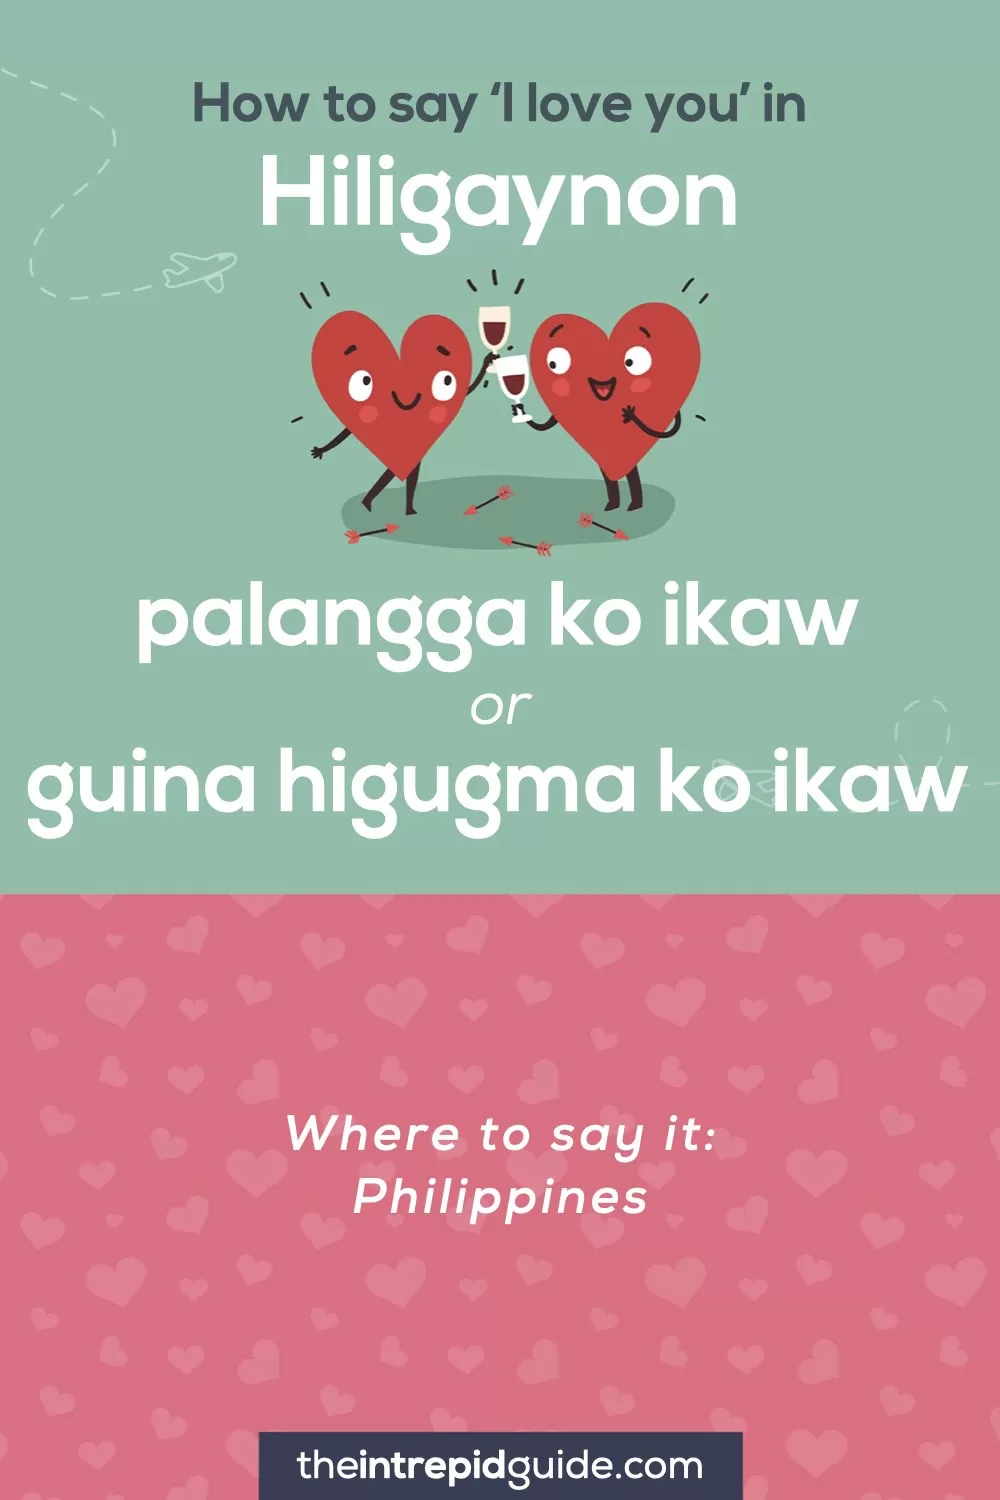 How to say I love you in different languages - Hiligaynon - palangga ko ikaw, guina higugma ko ikaw